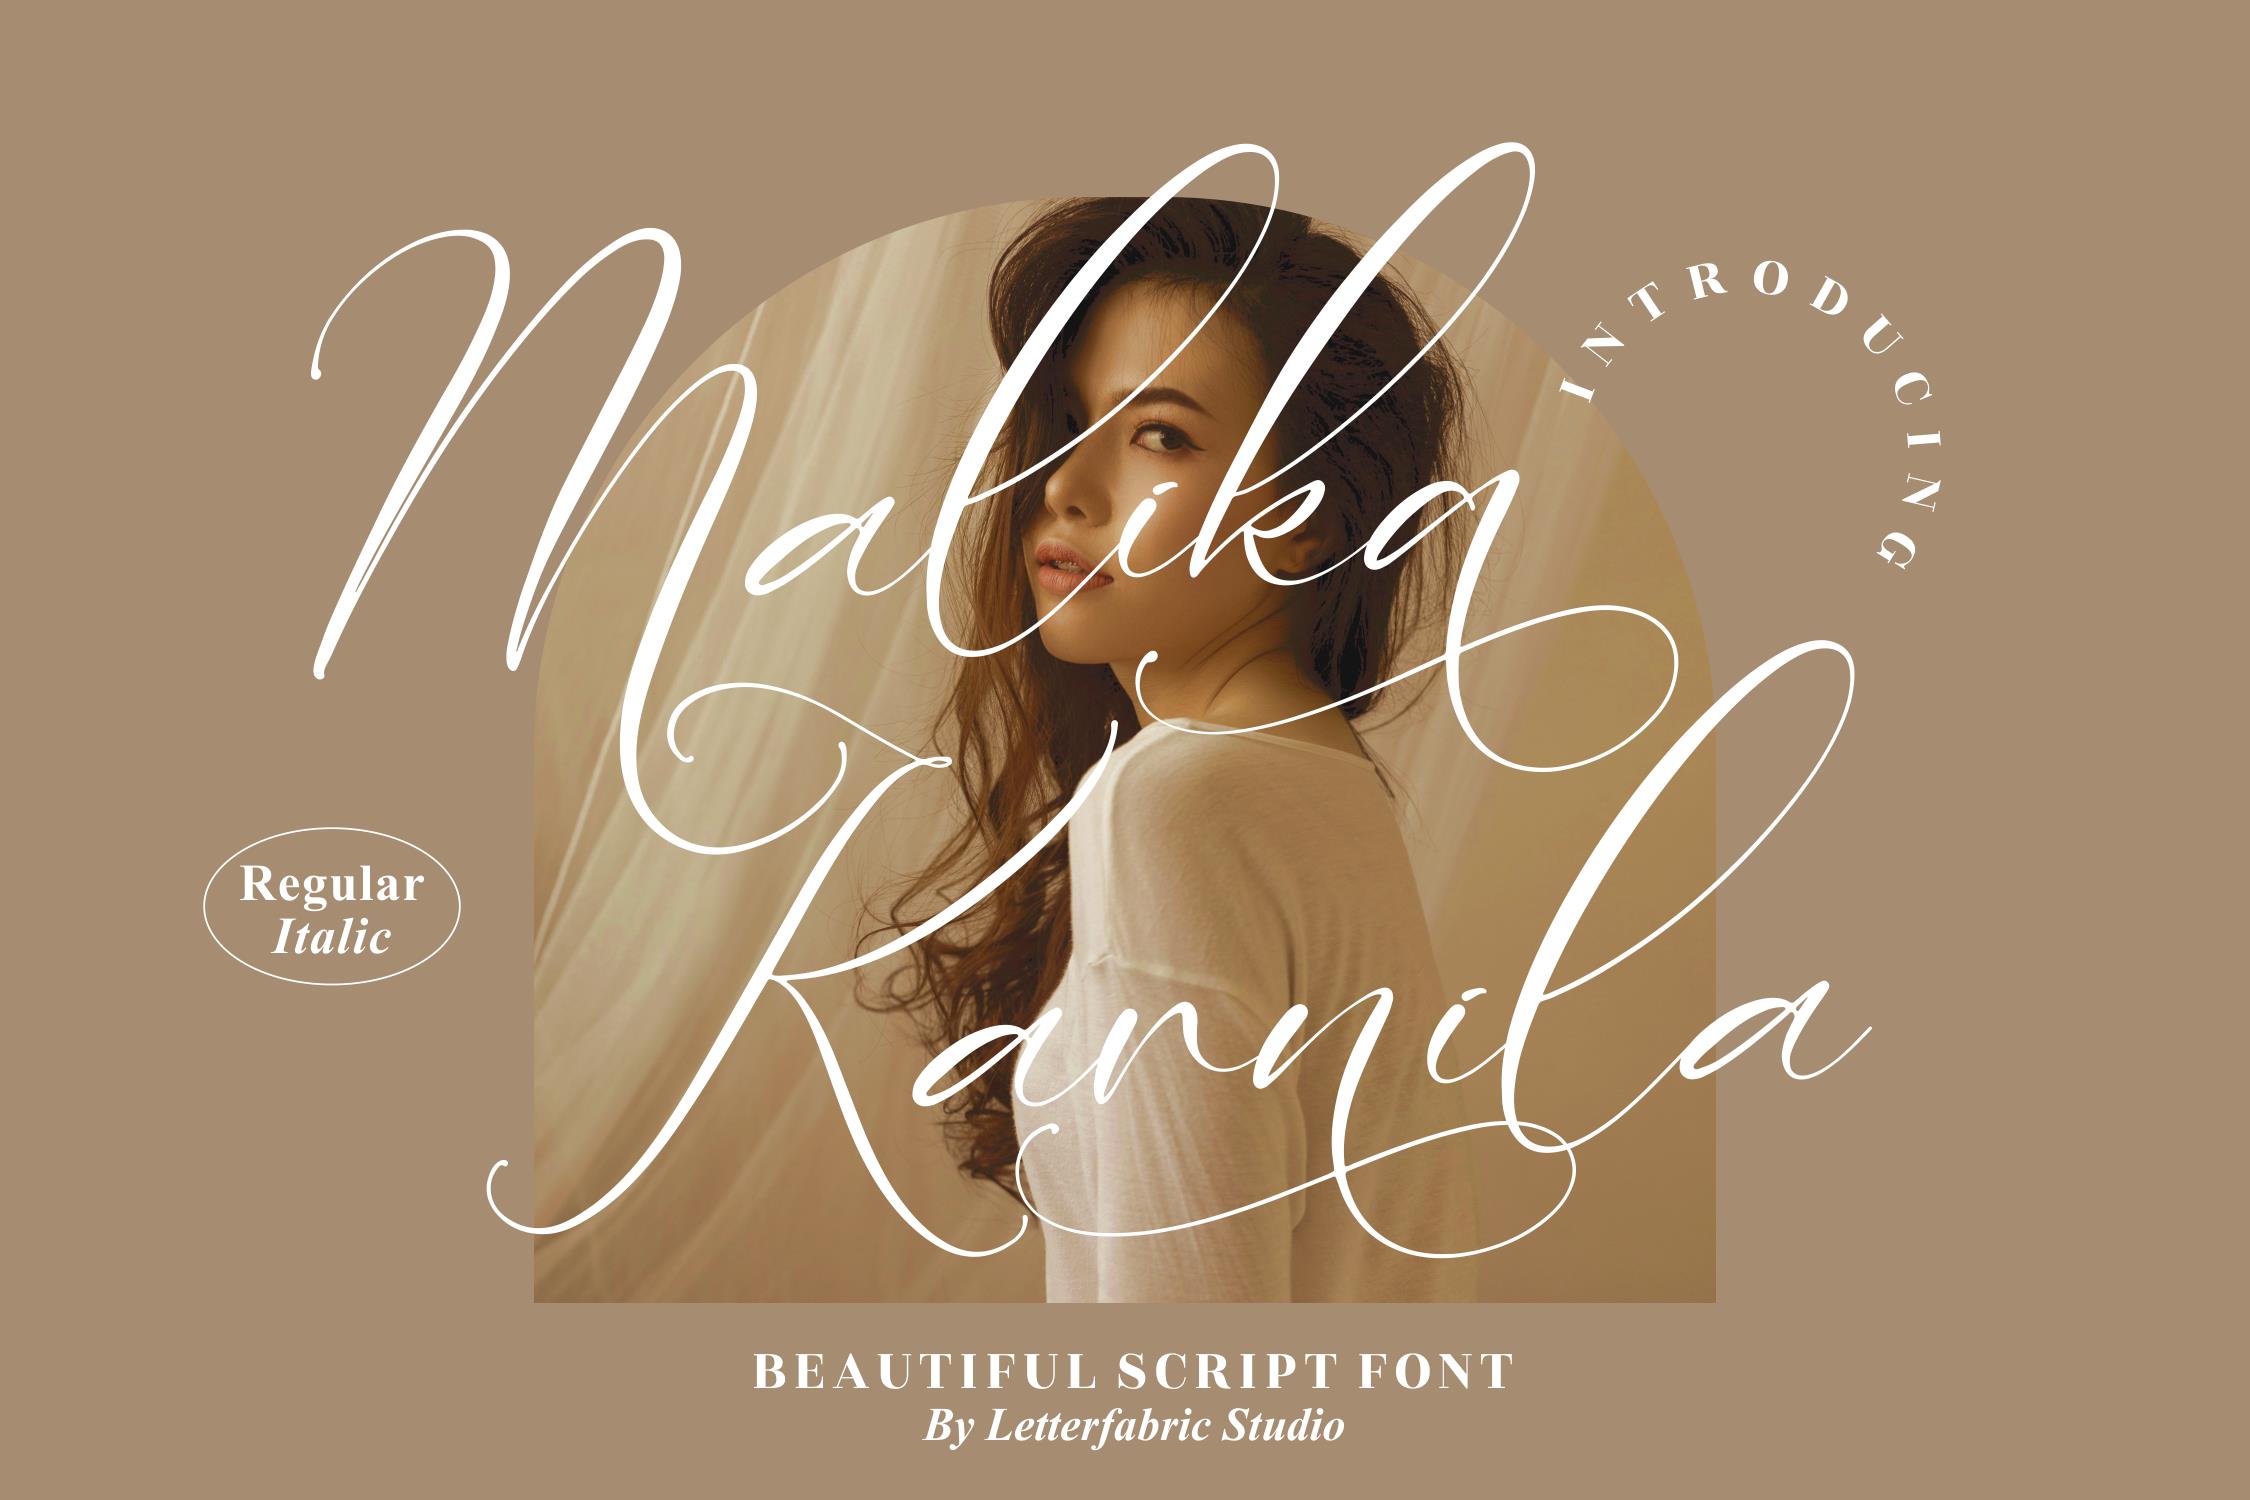 Malika Karnila Script Font